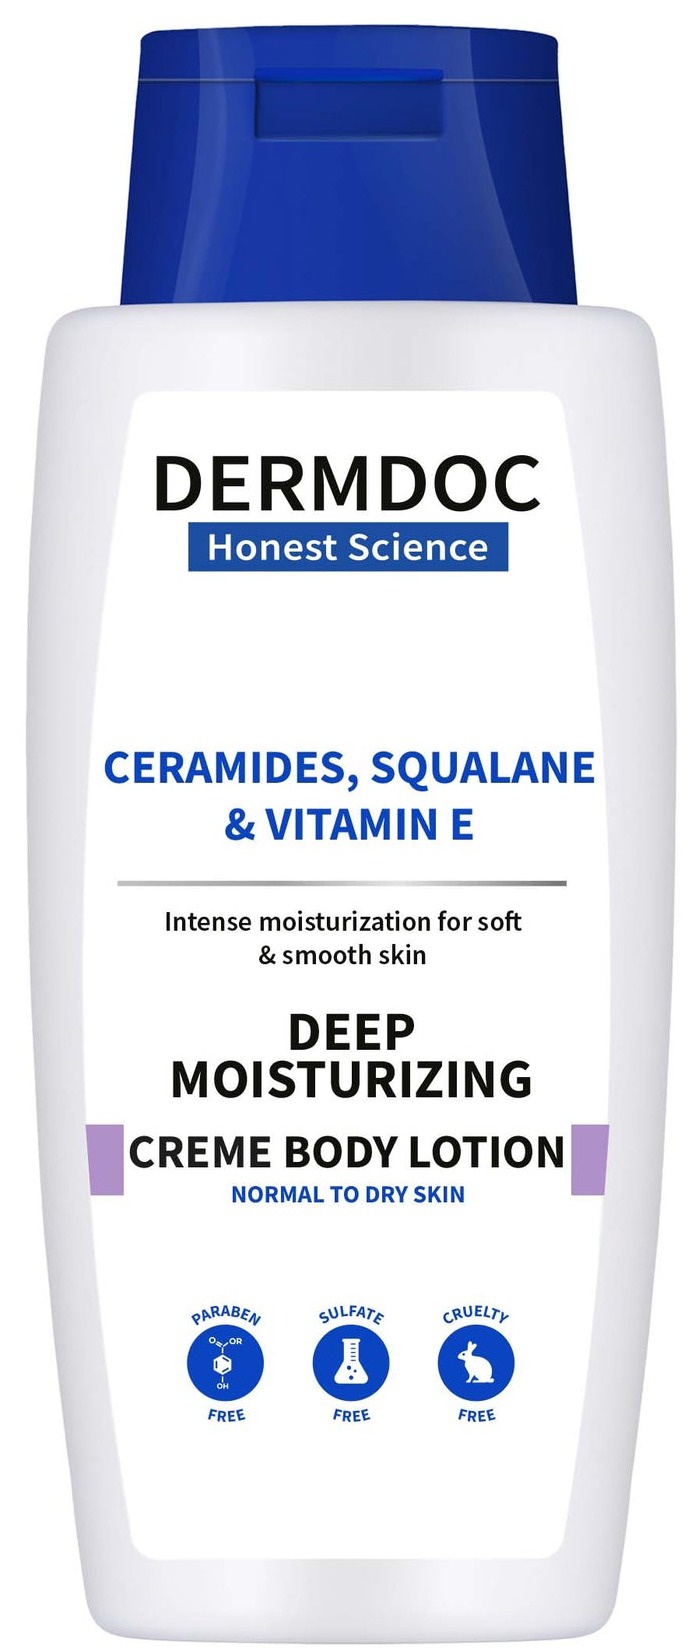 DermDoc Deep Moisturizing Creme Body Lotion